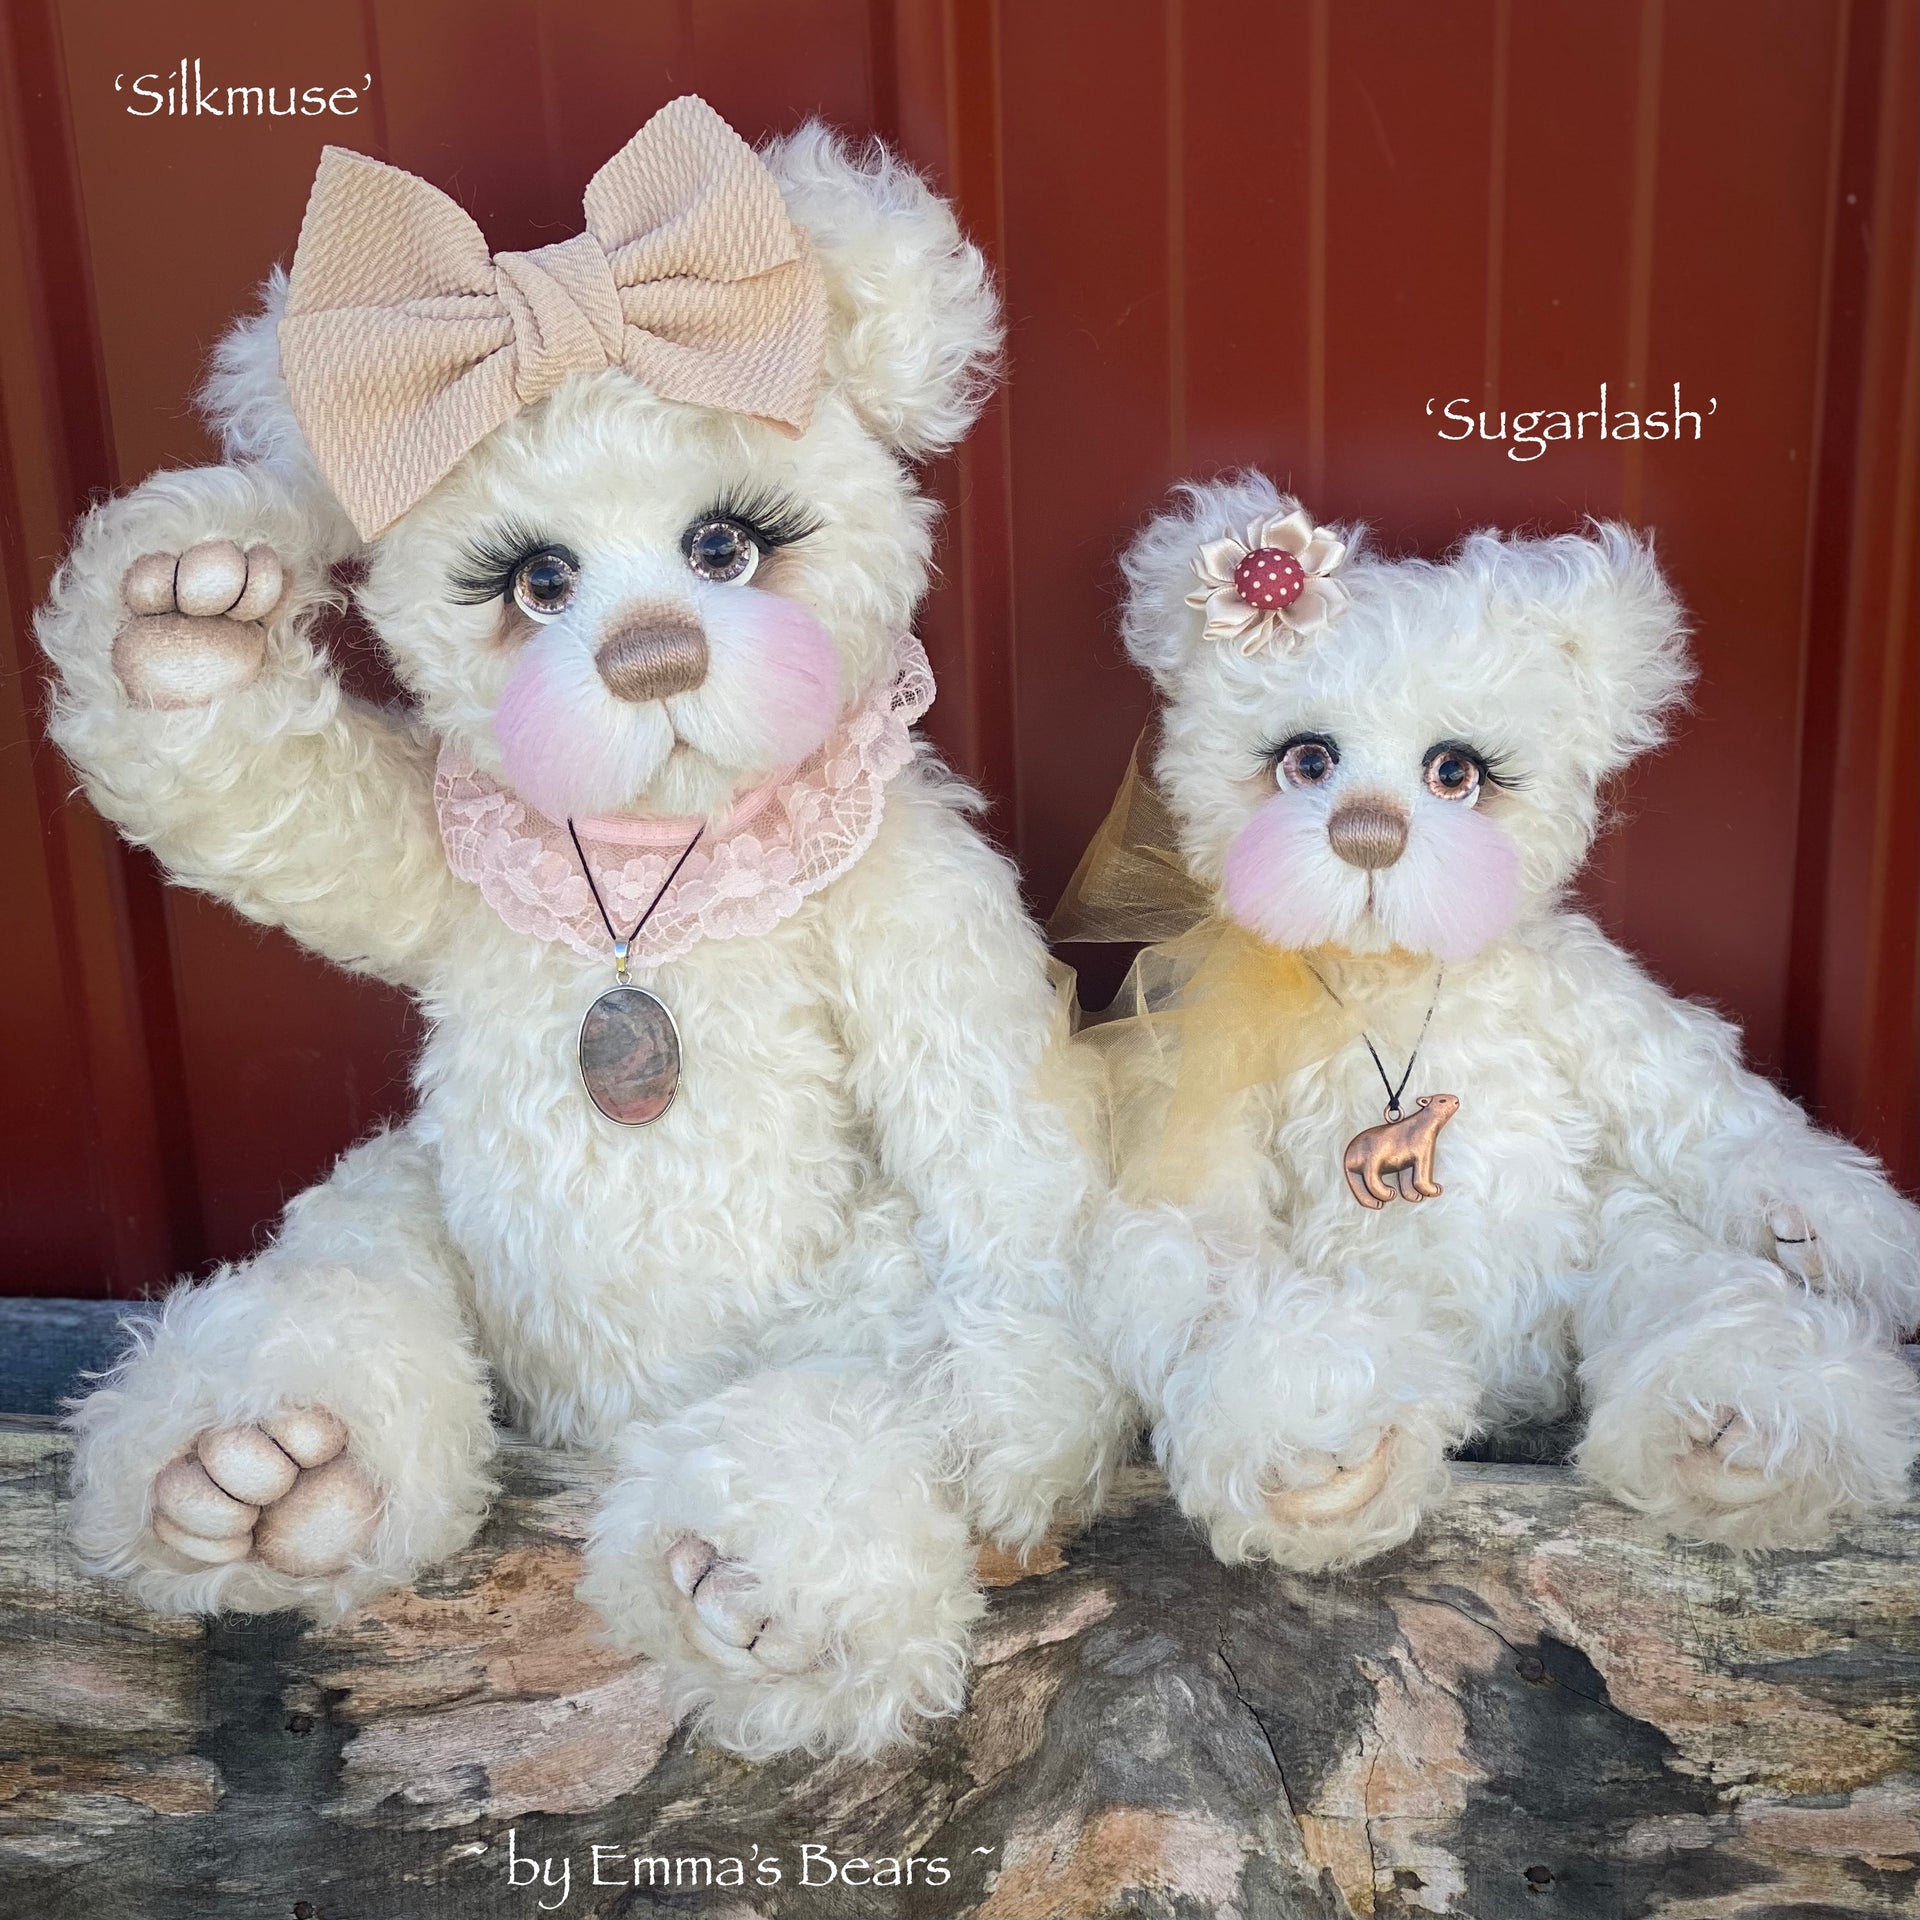 Sugarlash - 12" Curly Kid Mohair and Alpaca artist bear by Emma's Bears - OOAK